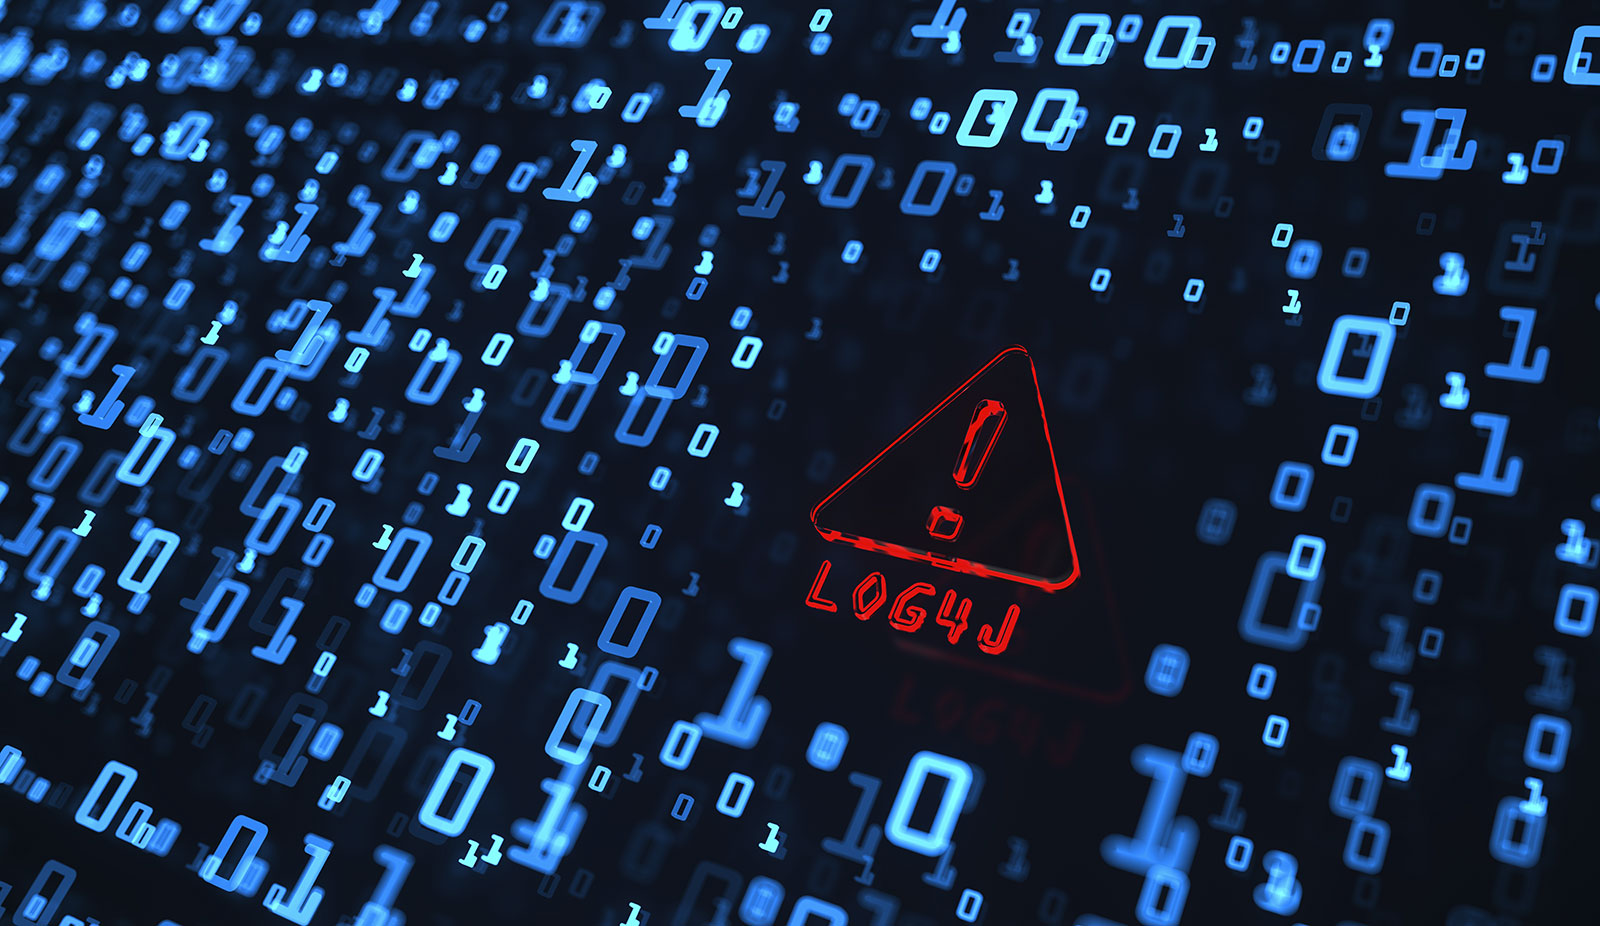 Kube Partners utilises ACSIA Intrusion Detection System against Log4J vulnerability